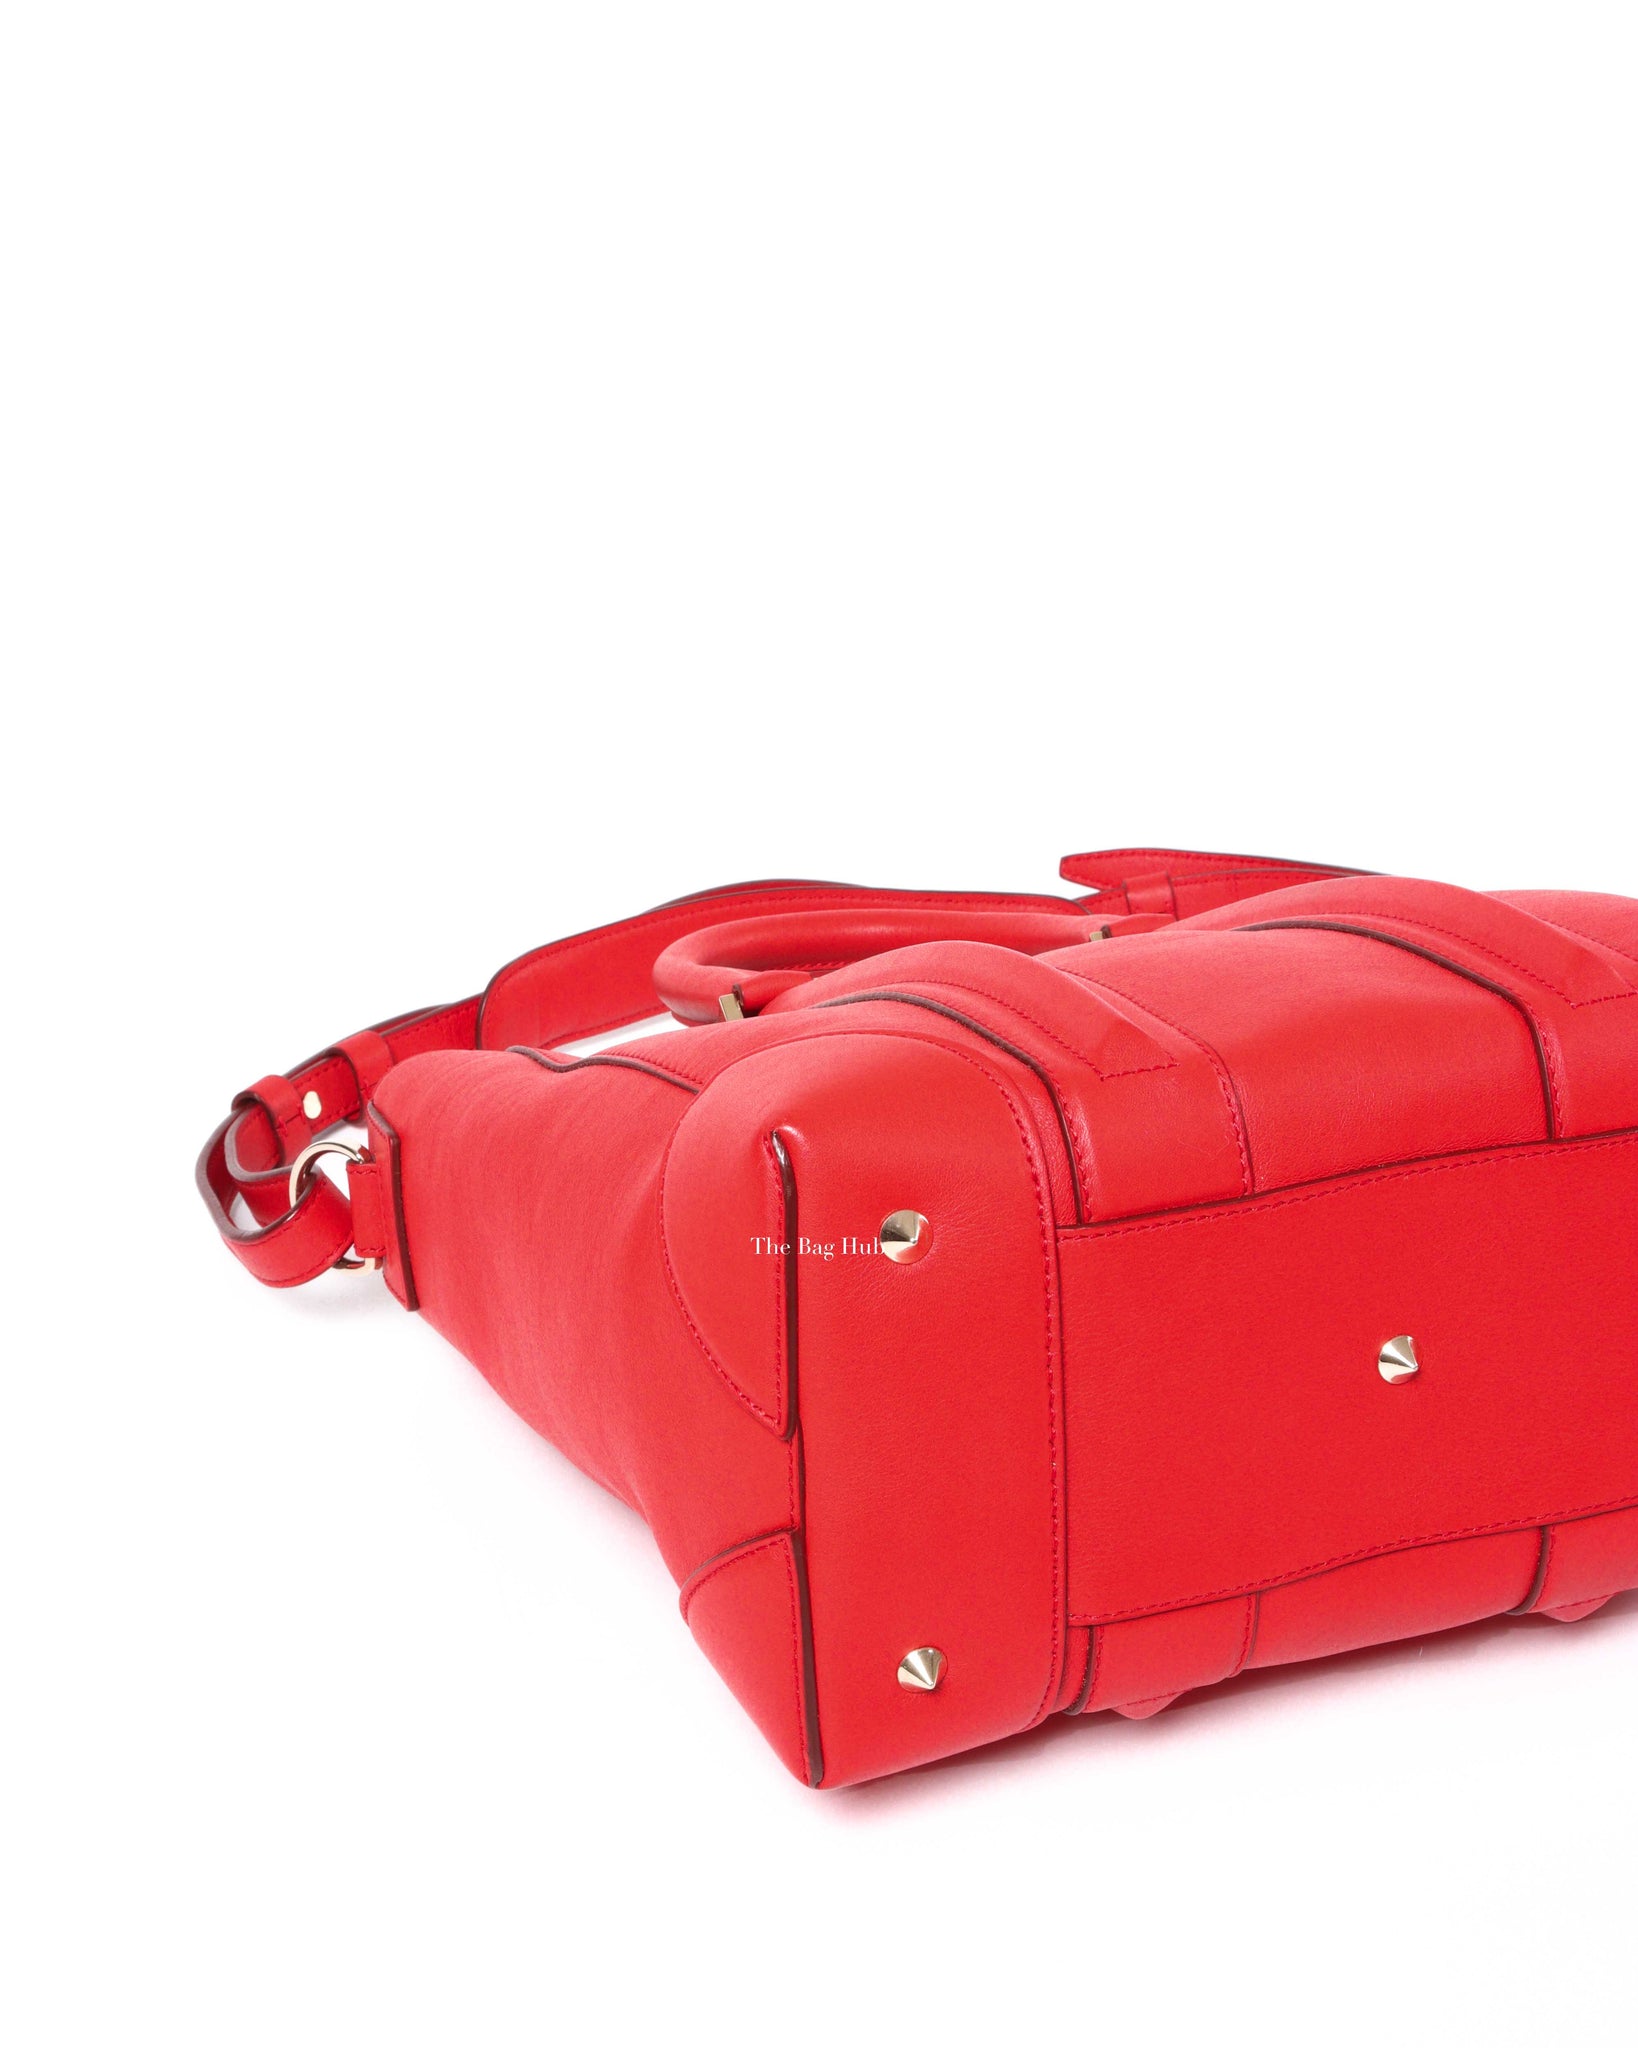 Givenchy Red Lucrezia Convertible Bag-7